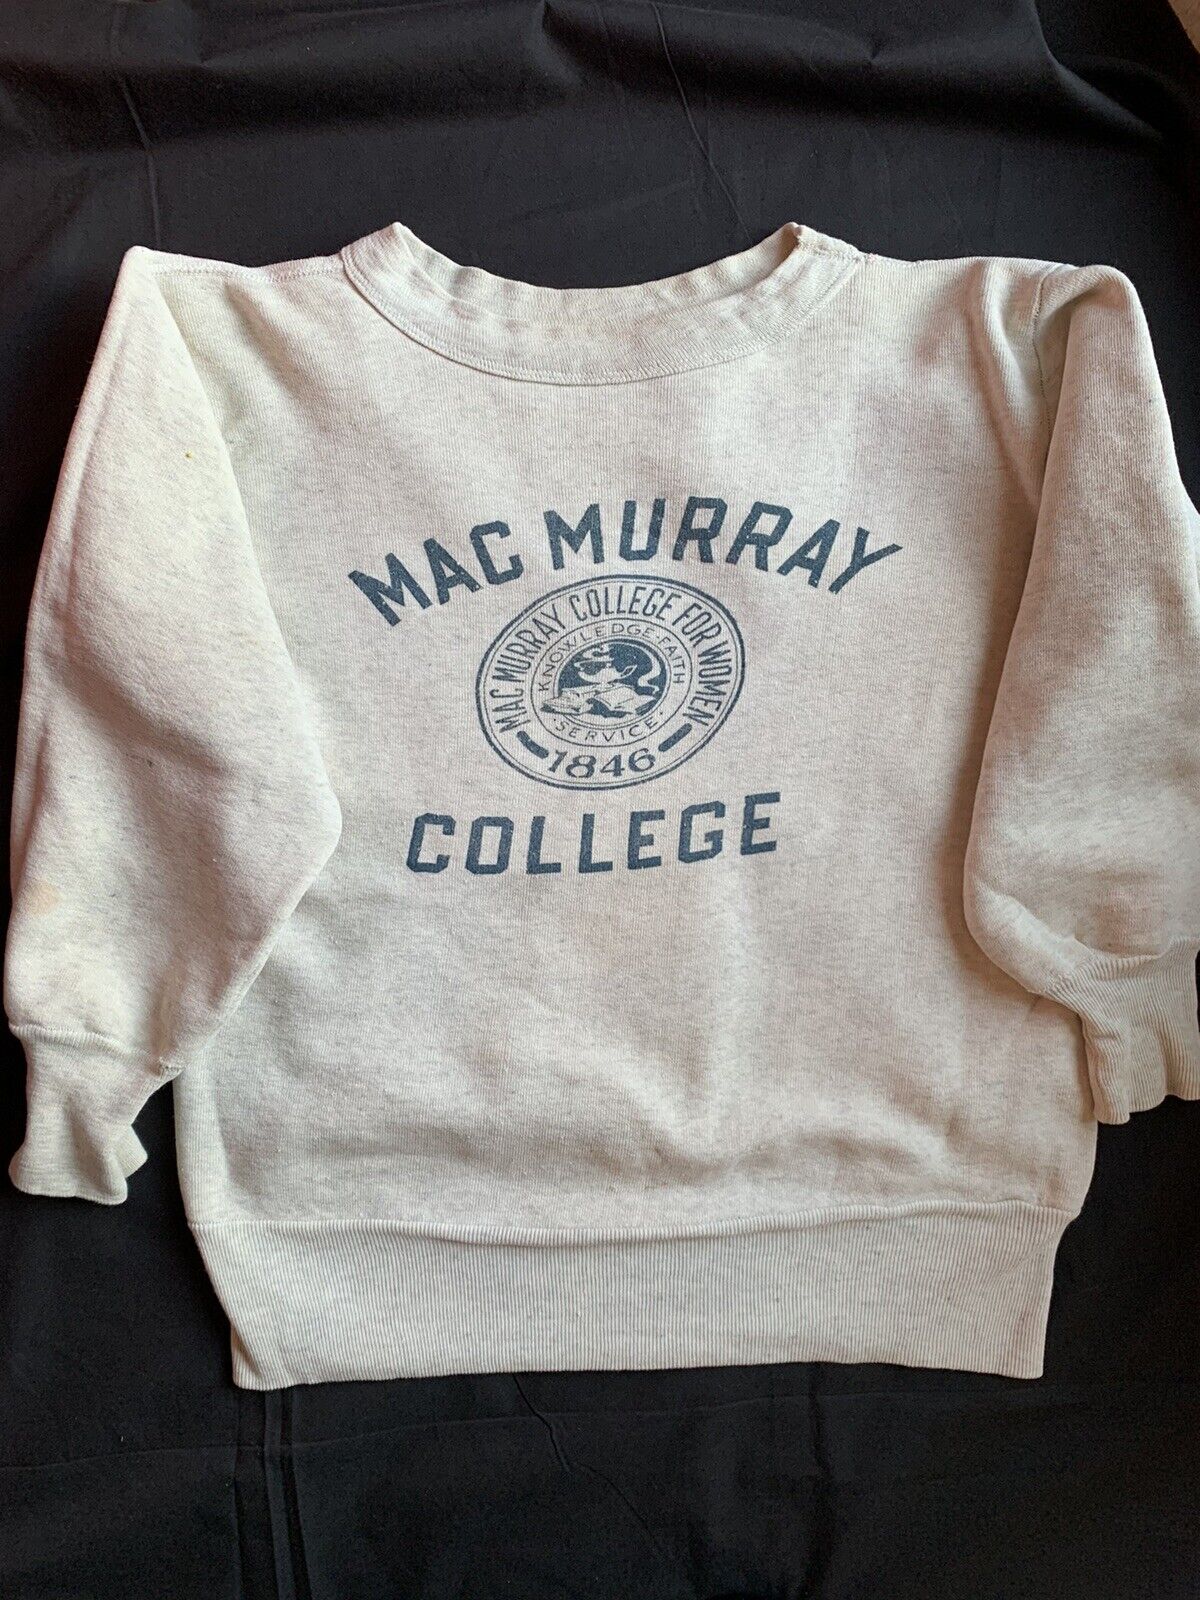 Vintage MacMurray College Sweatshirt